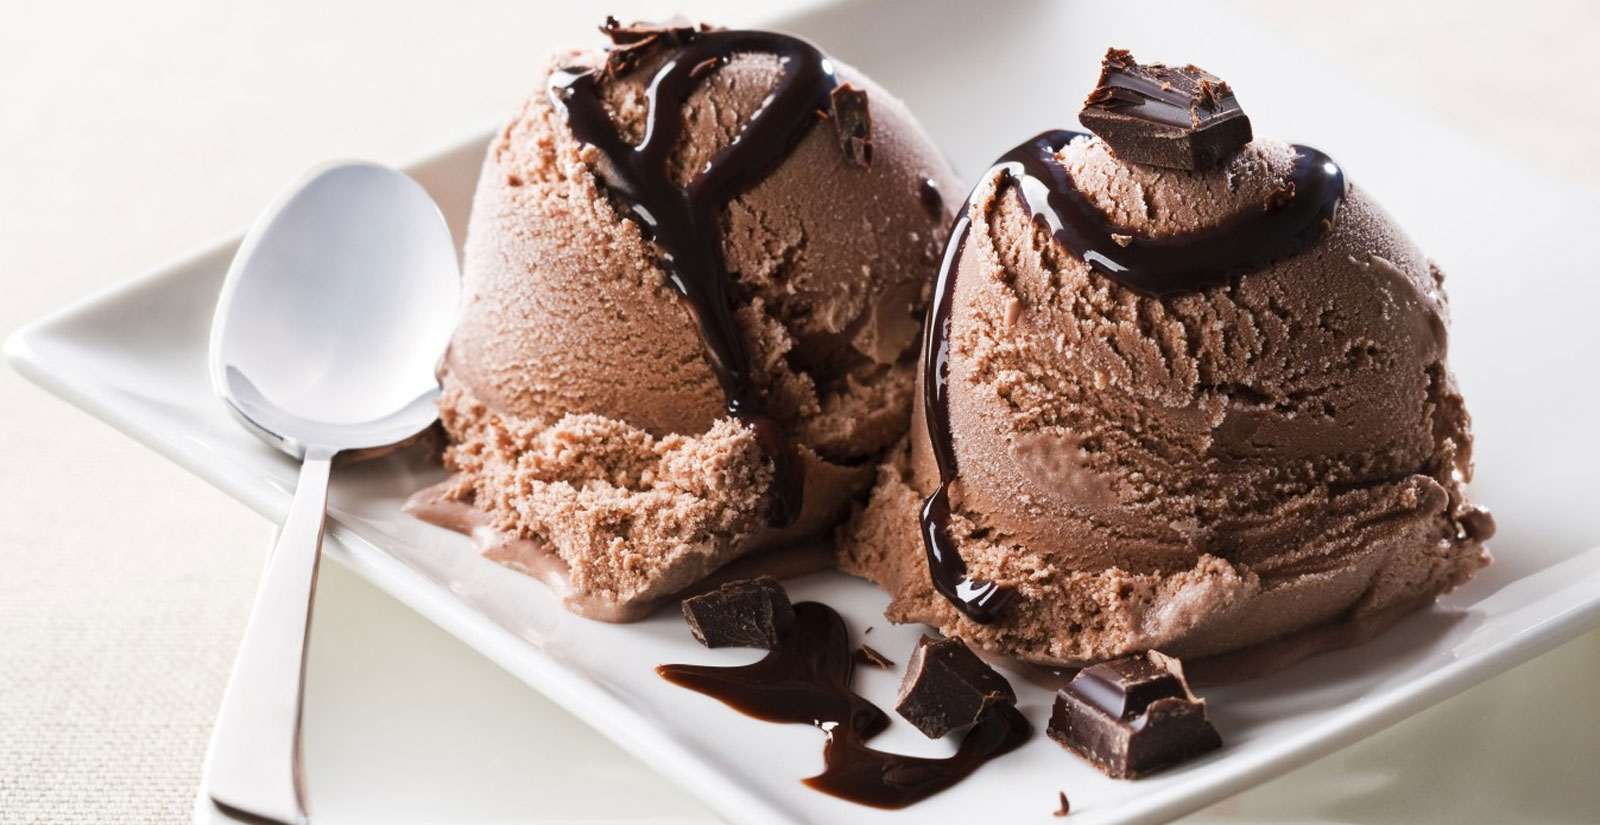 Chocolate Ice Cream Pictures